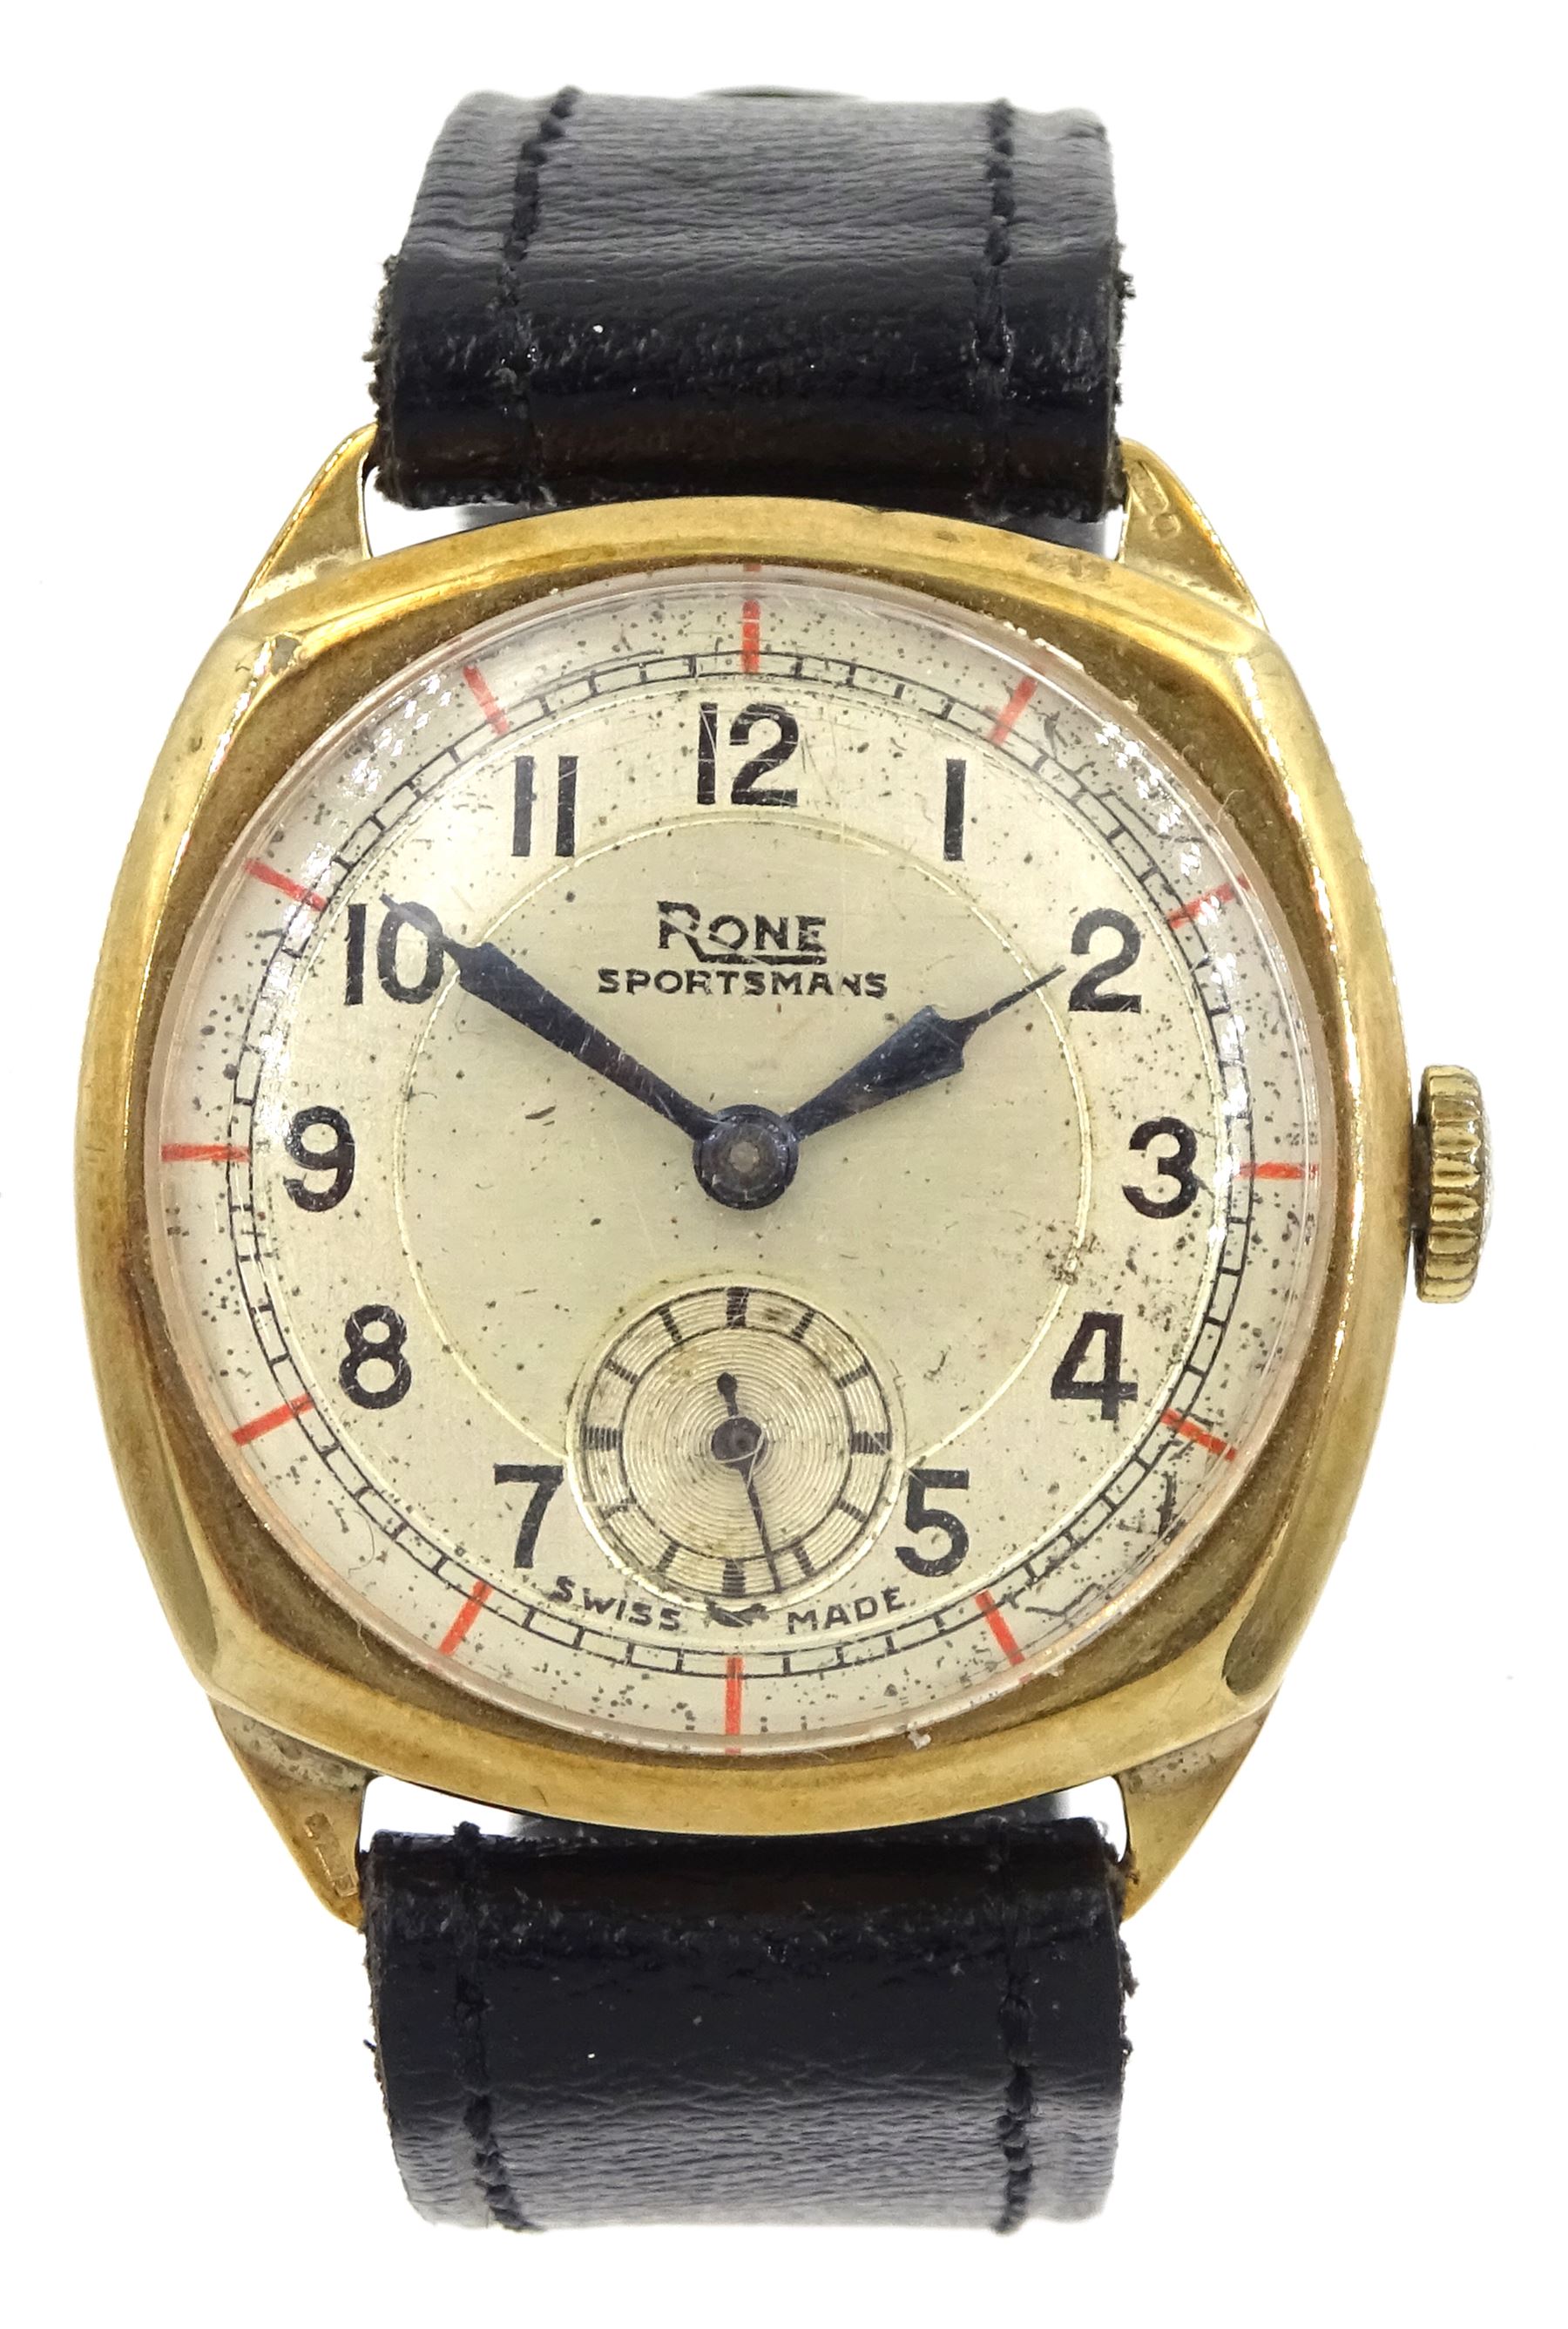 Raich Carter - Rone Sportsmans gent's 9ct gold cased manual wind wrist-watch